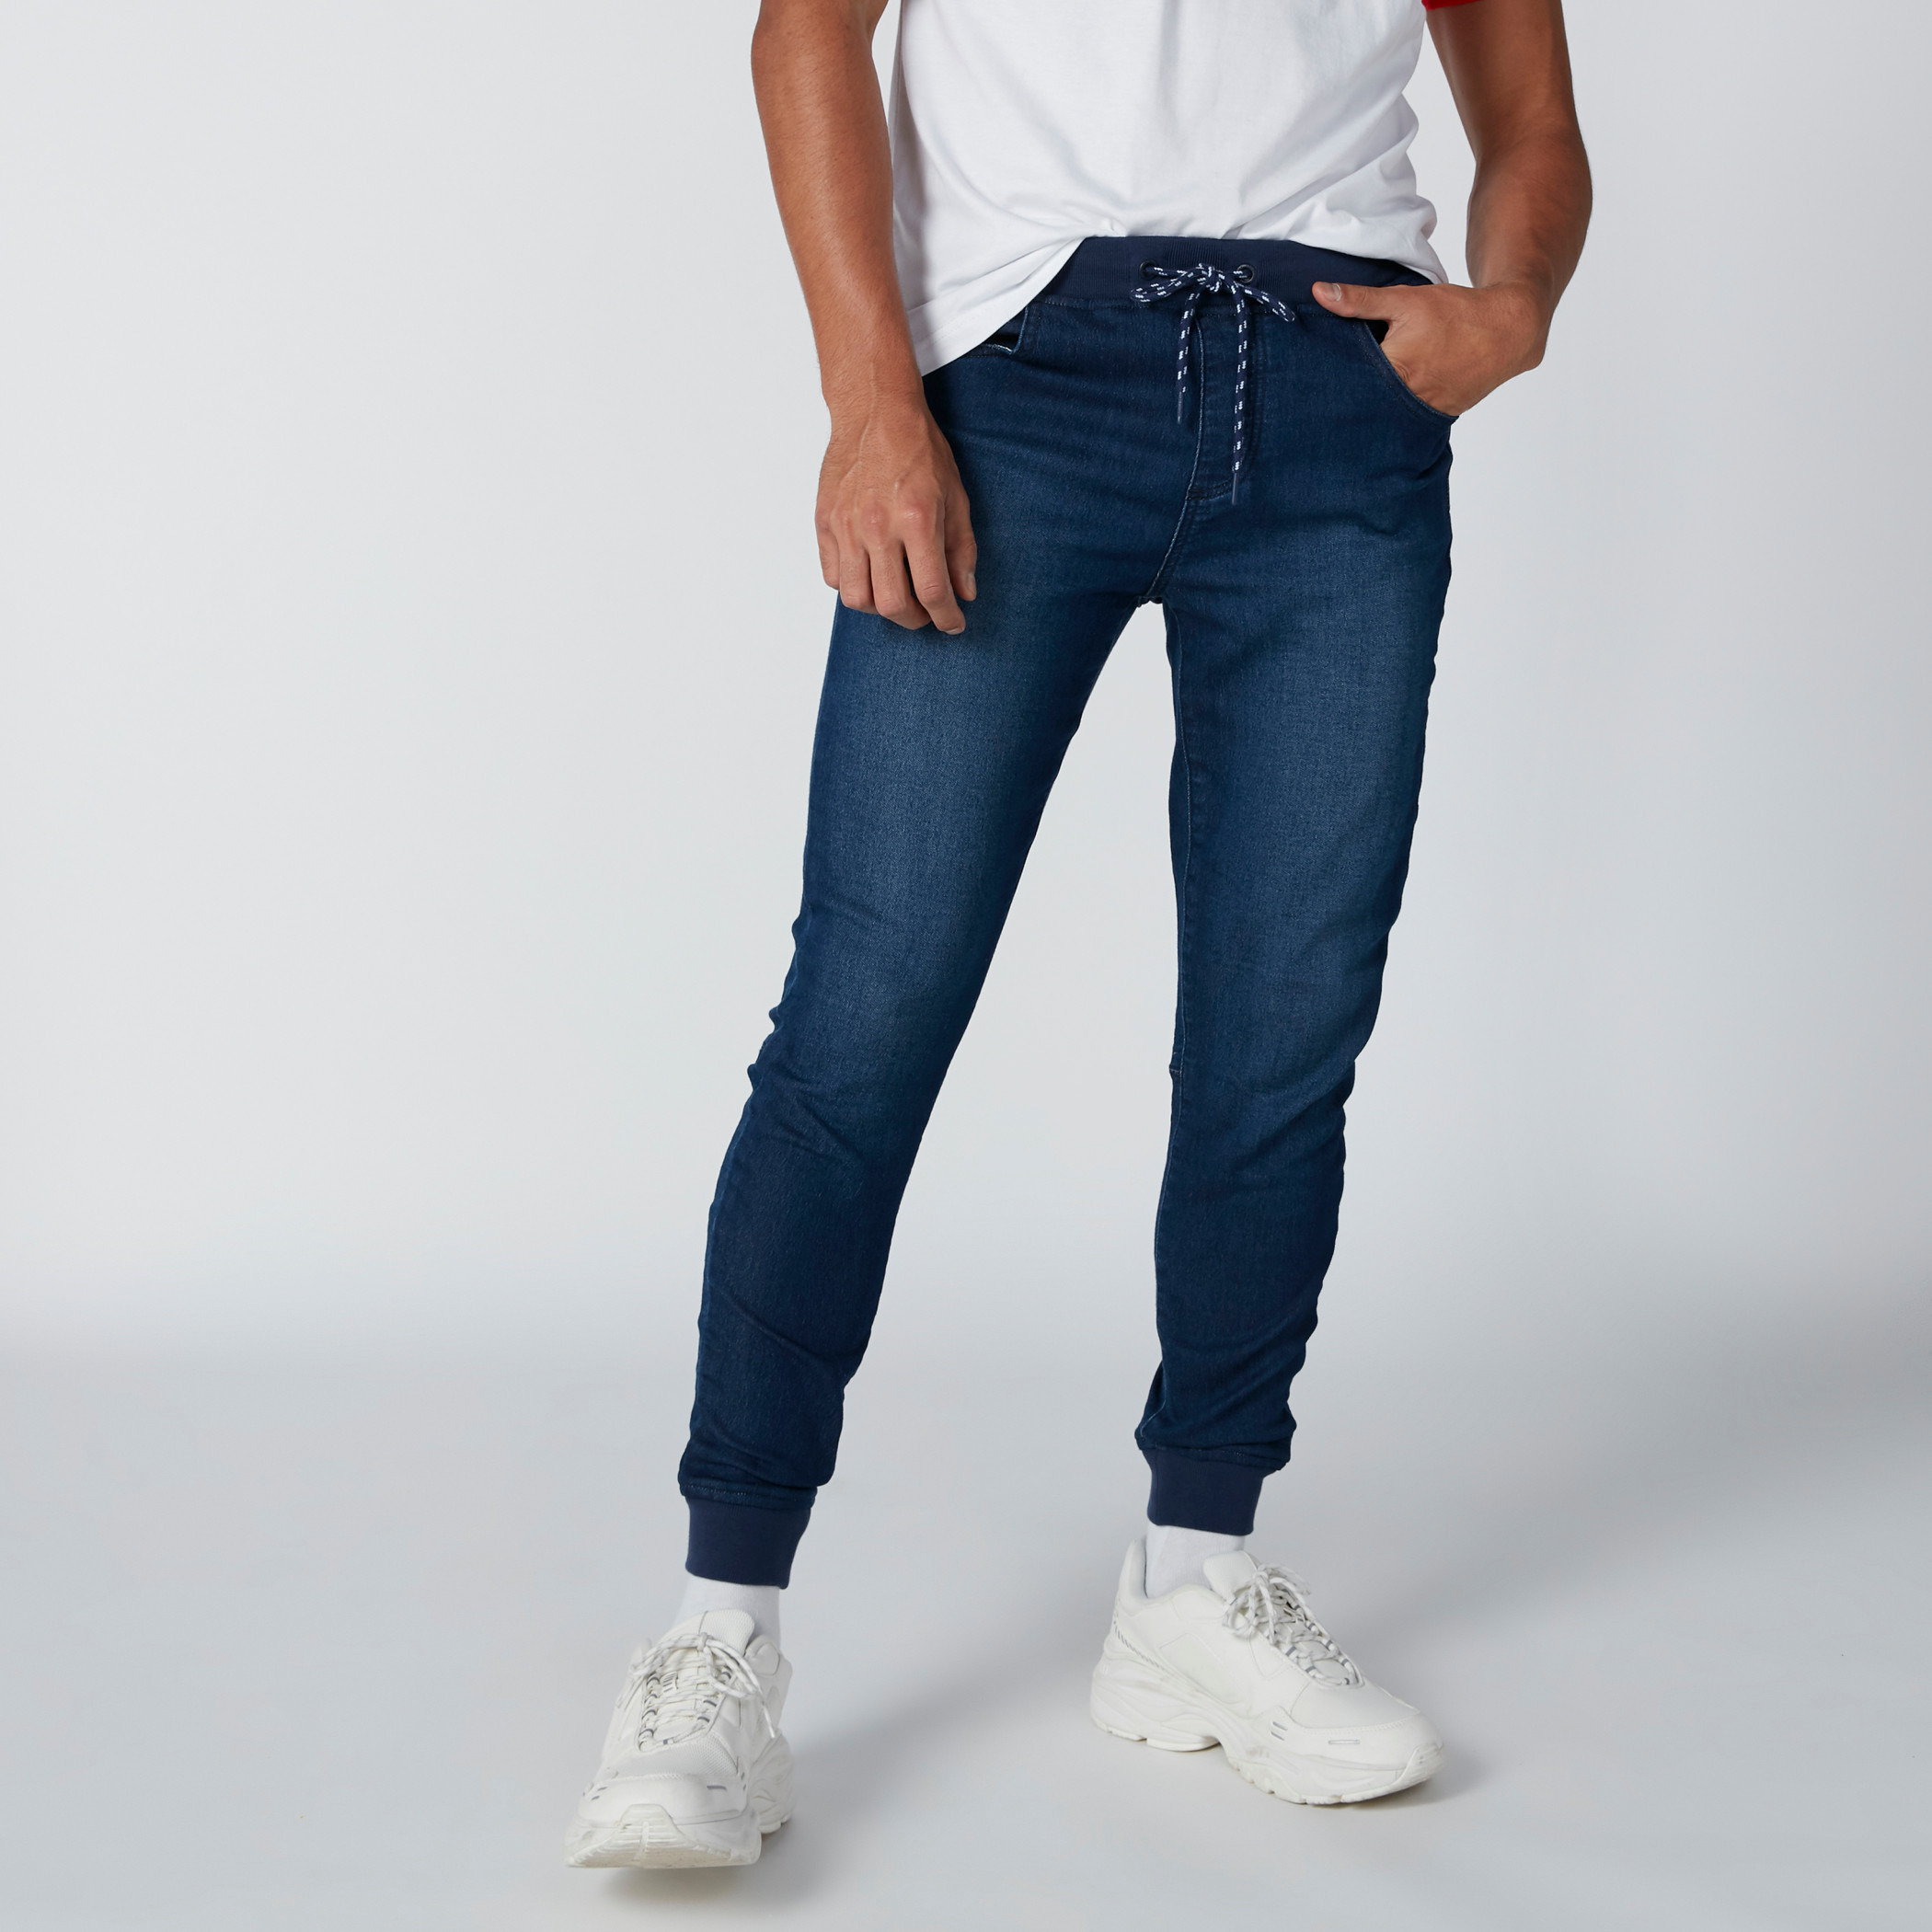 Lee Cooper Mens Black Denim Joggers/Trousers Cuffed Hem Jeans Size W36/L30  | eBay